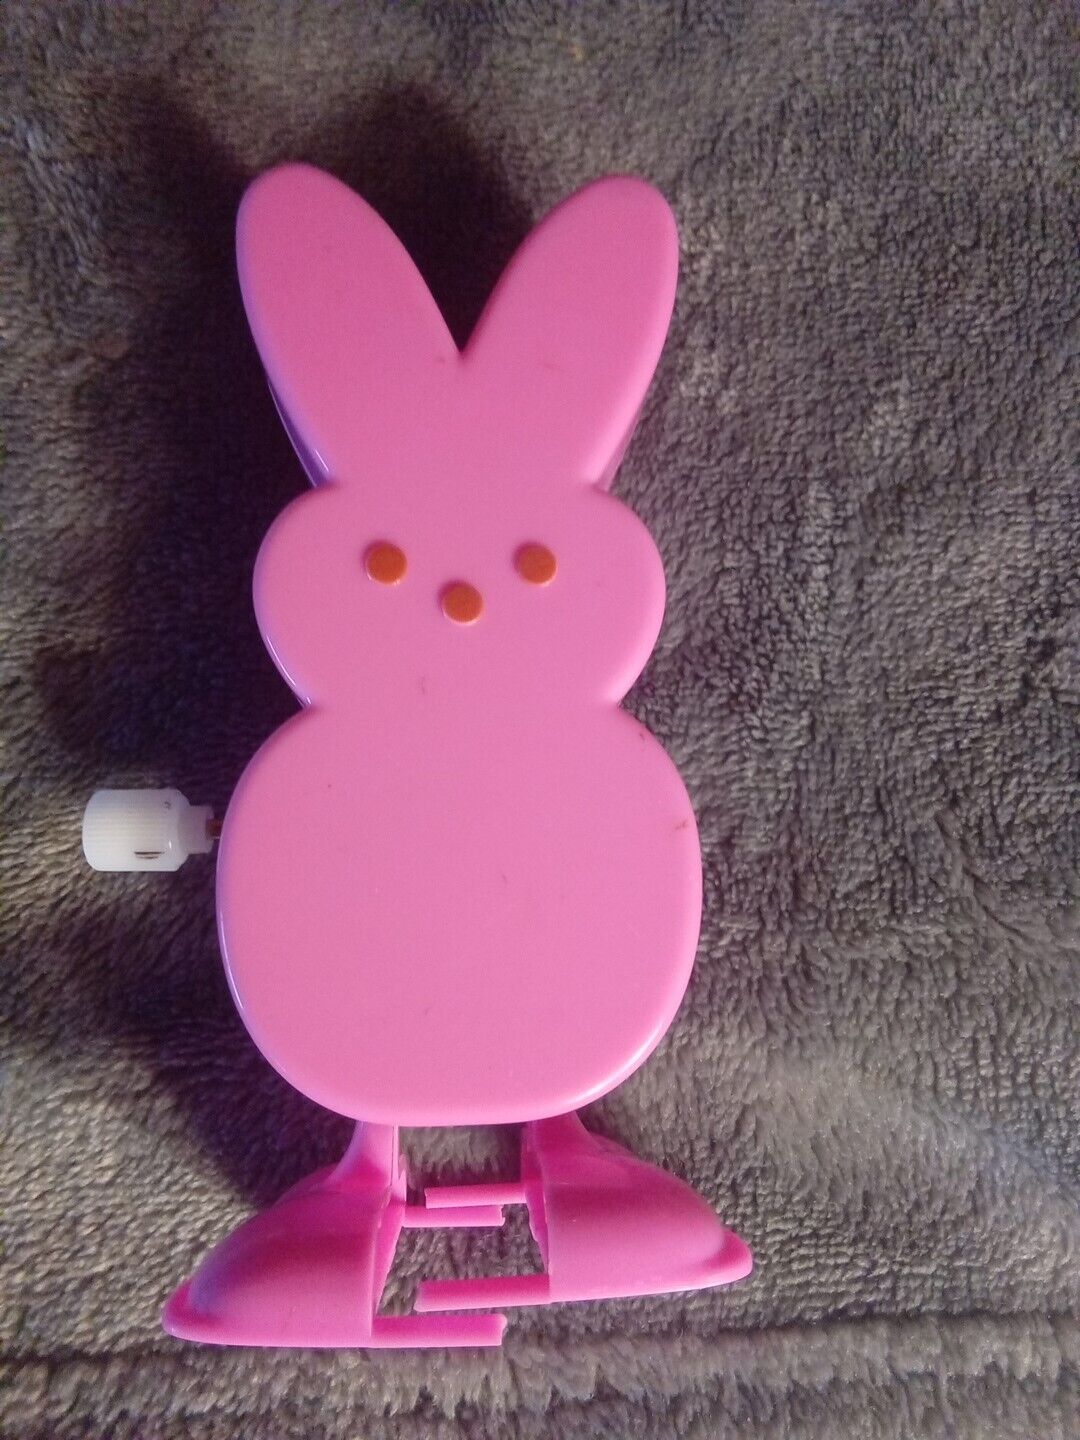 Peeps Pink Bunny Rabbit 4” Wind-Ups Walking Toy Easter Holiday Little Kids 2018